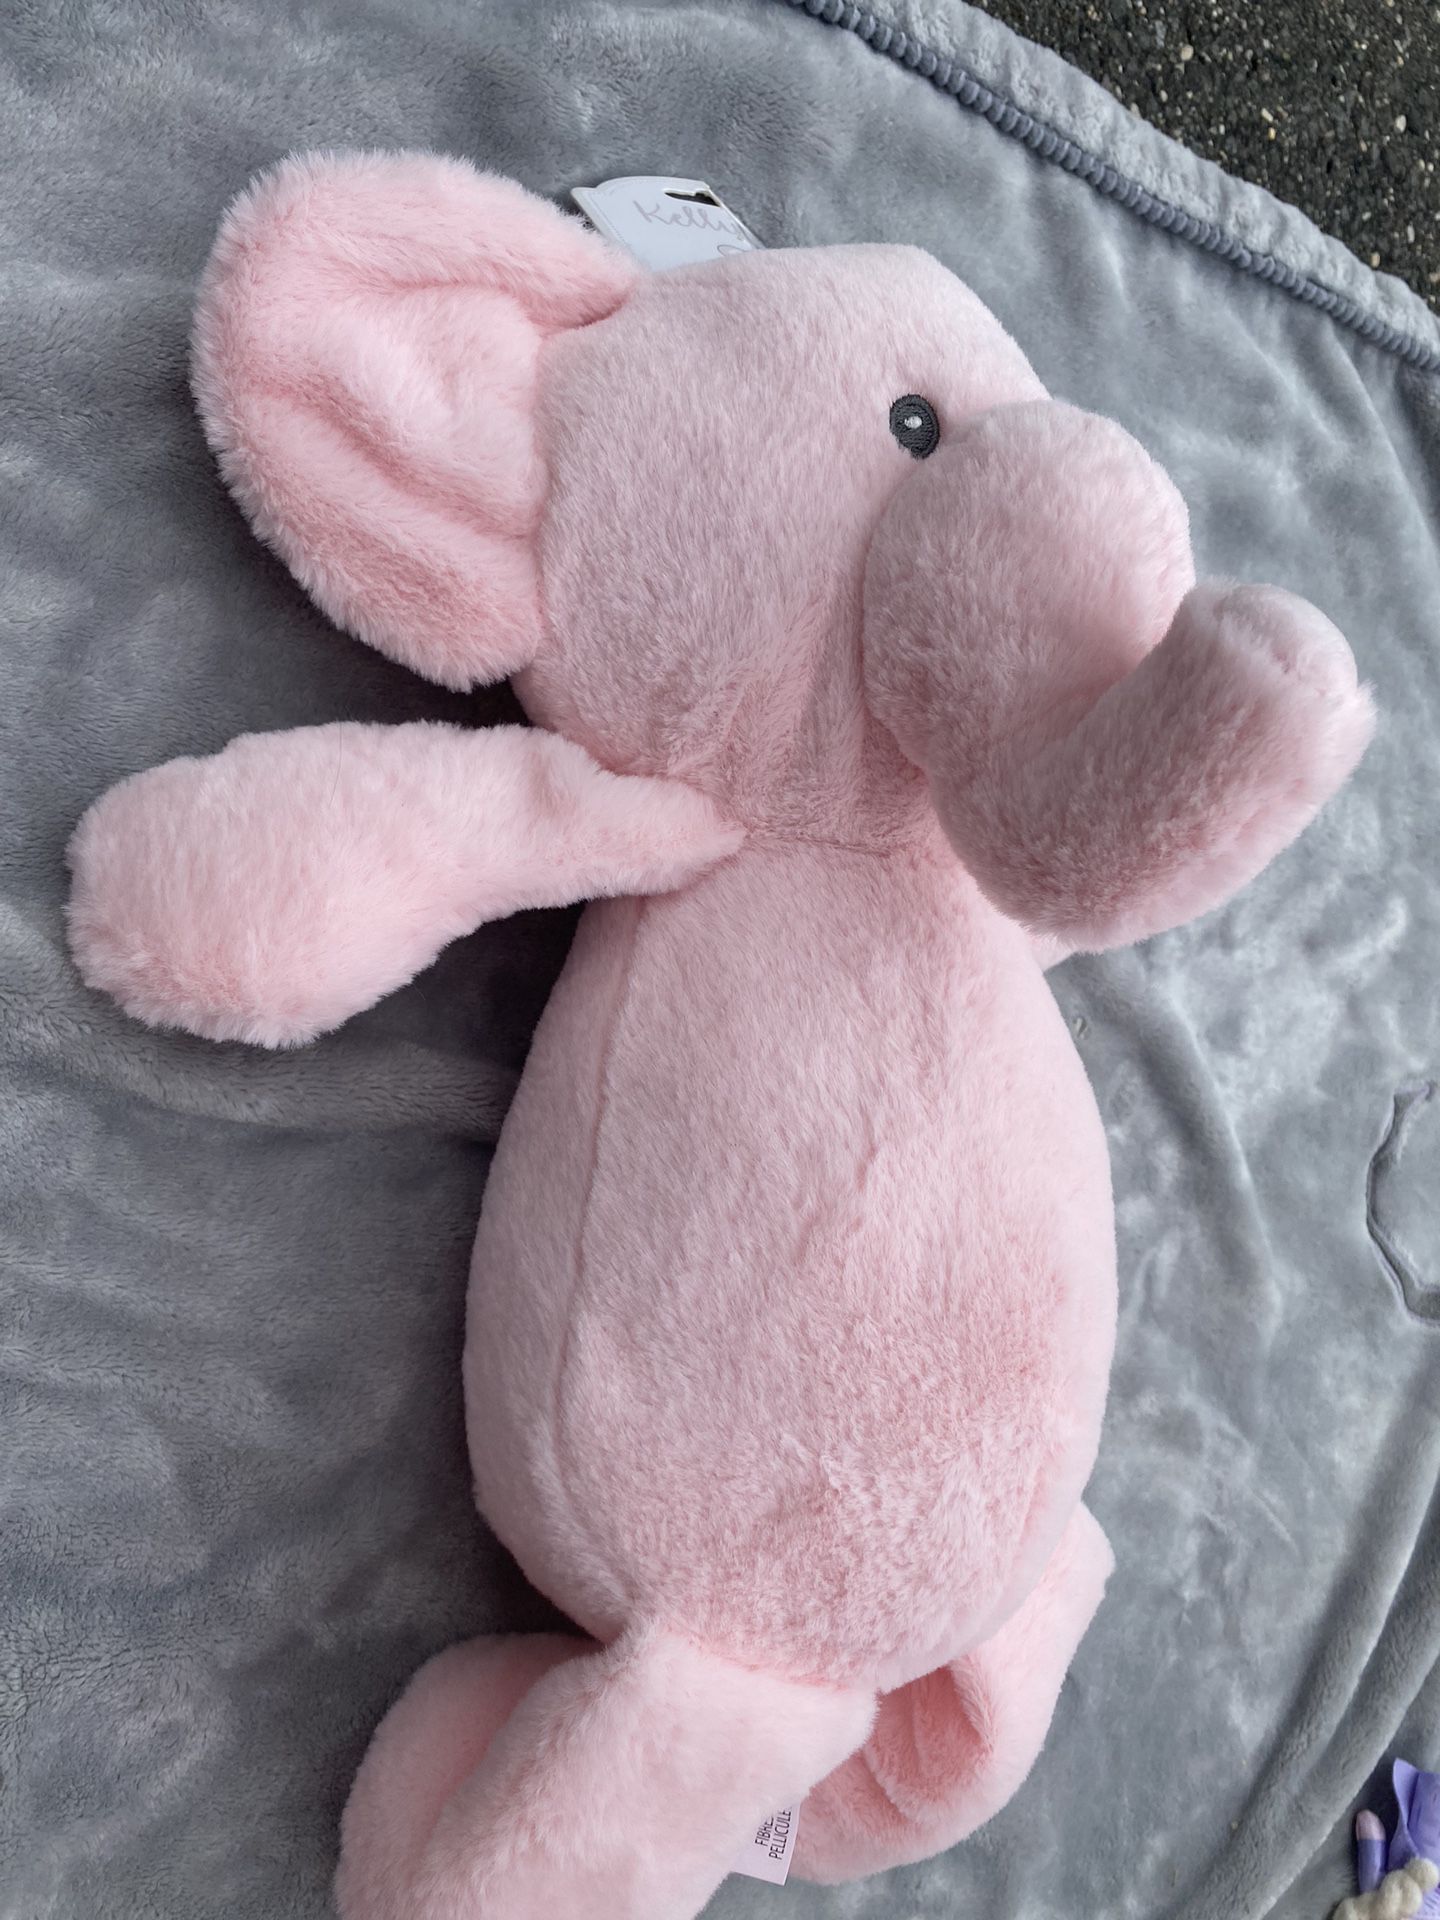 Kelly Baby Pink Elephant Plush Toy 17 Inches Stuffed Rattle Animal Toy